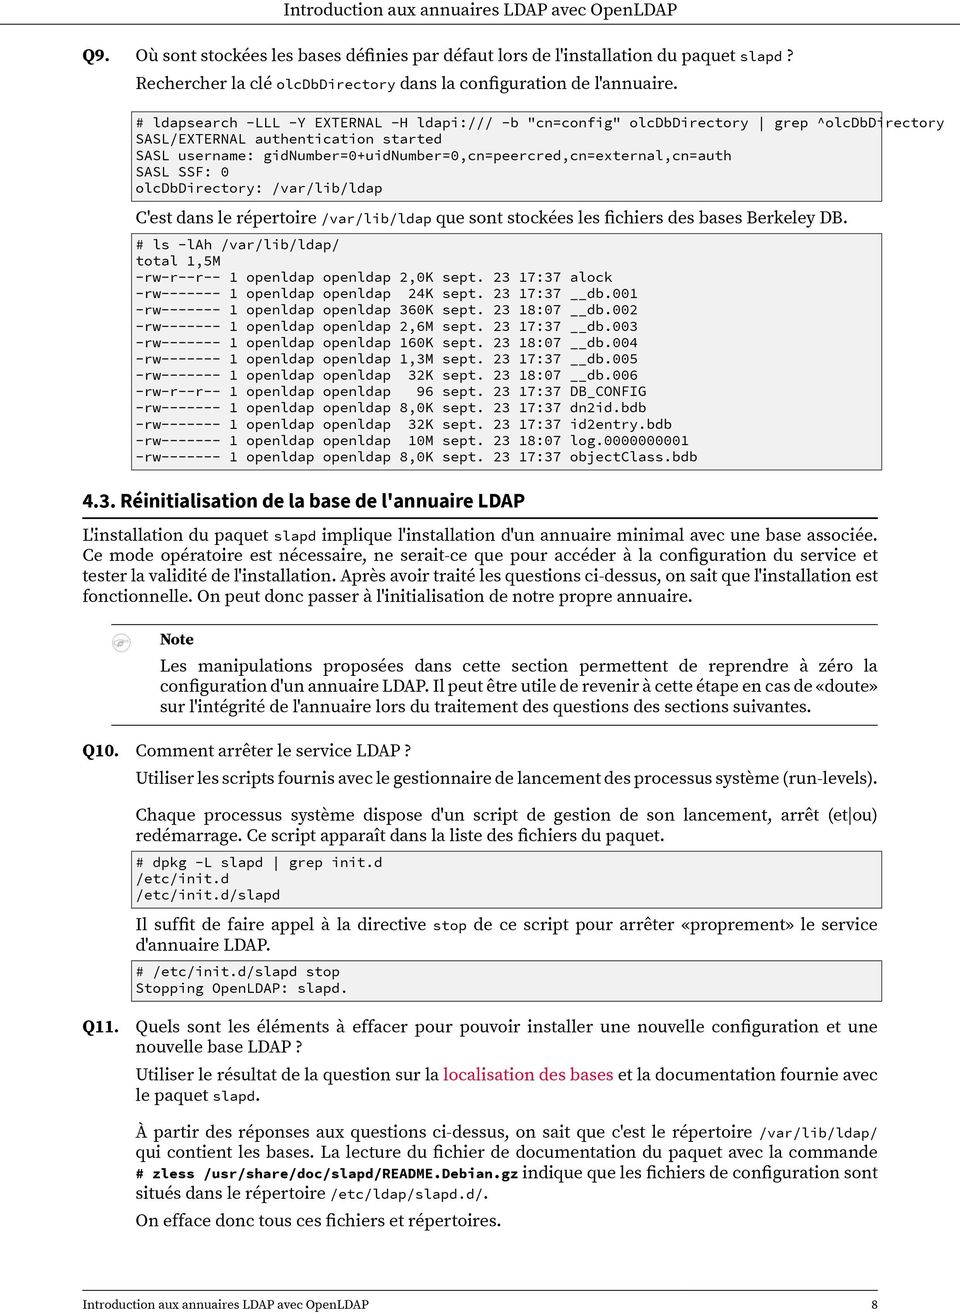 gidnumber=0+uidnumber=0,cn=peercred,cn=external,cn=auth SASL SSF: 0 olcdbdirectory: /var/lib/ldap C'est dans le répertoire /var/lib/ldap que sont stockées les fichiers des bases Berkeley DB.